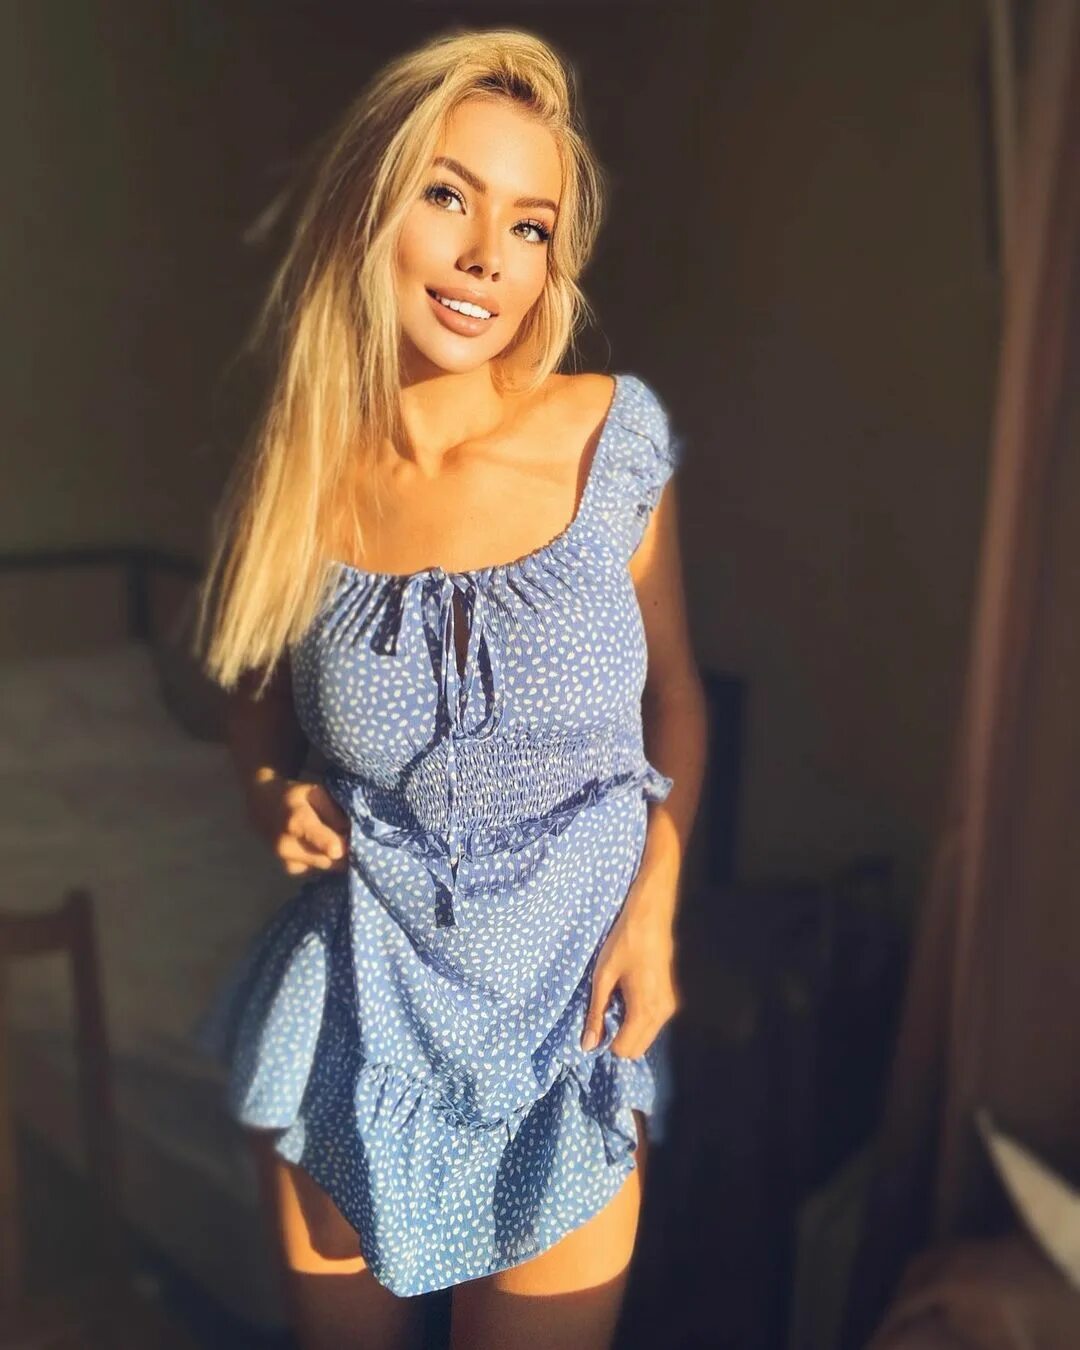 Maria Avtakhova on Instagram